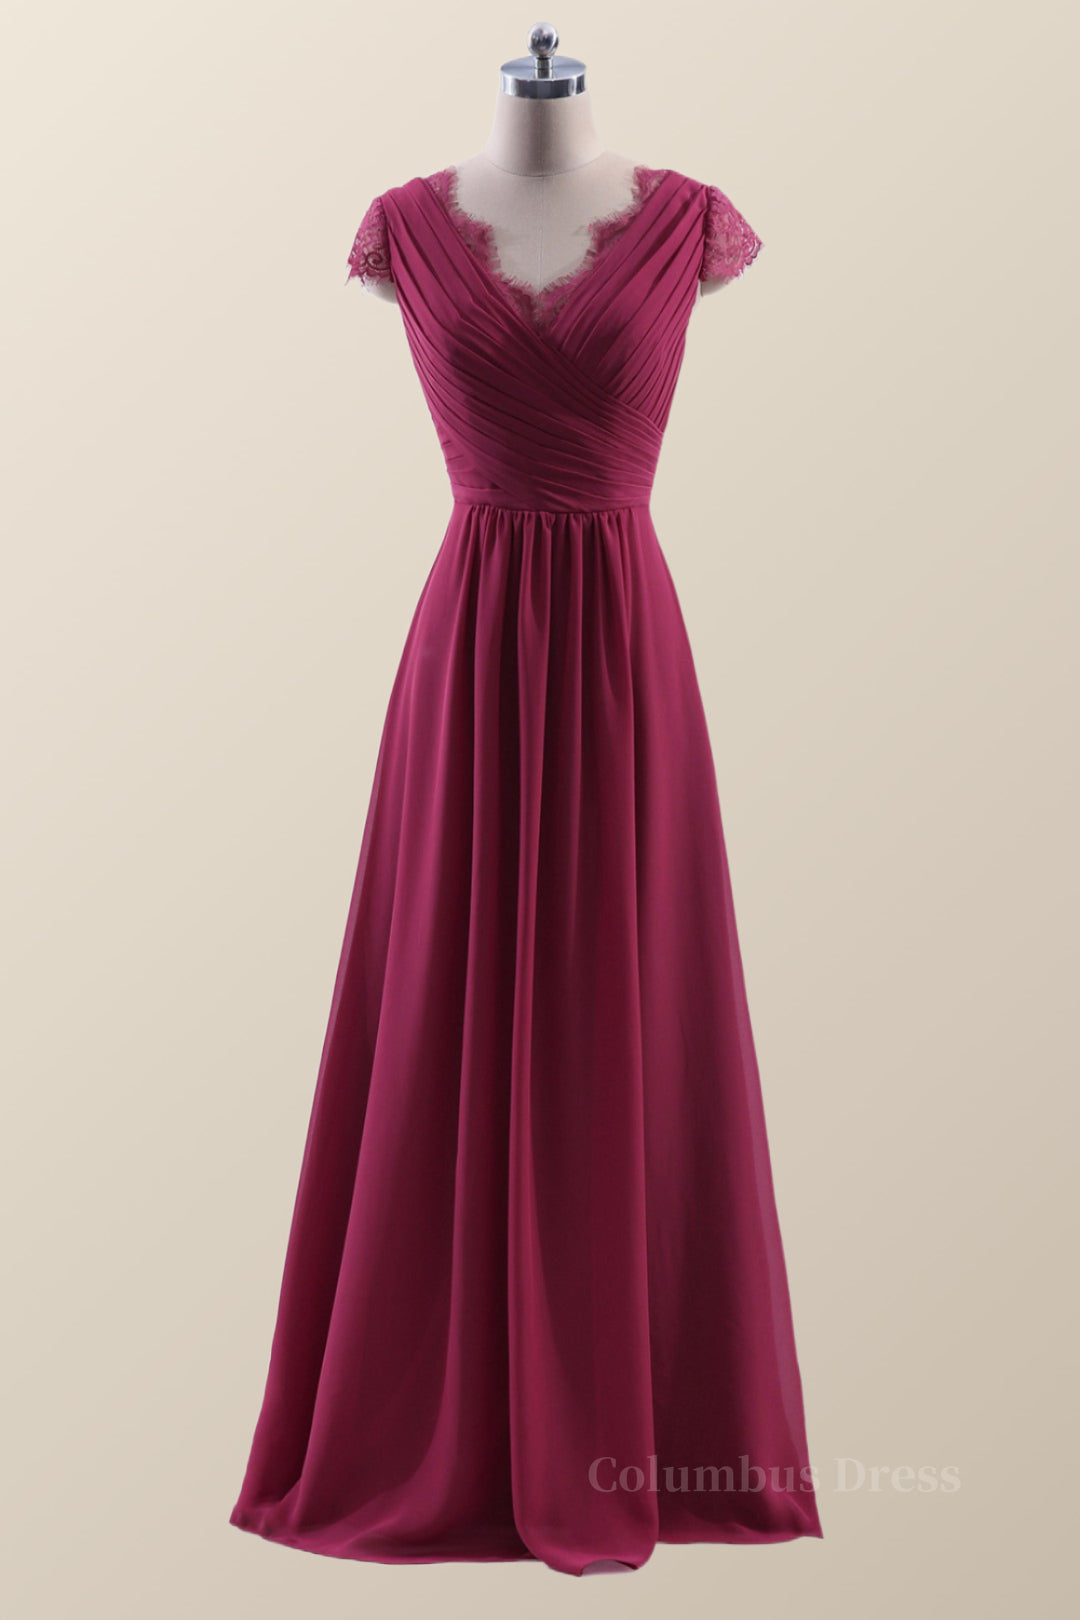 Cap Sleeves Burgundy Chiffon Long Corset Bridesmaid Dress outfit, Party Dresses Sales